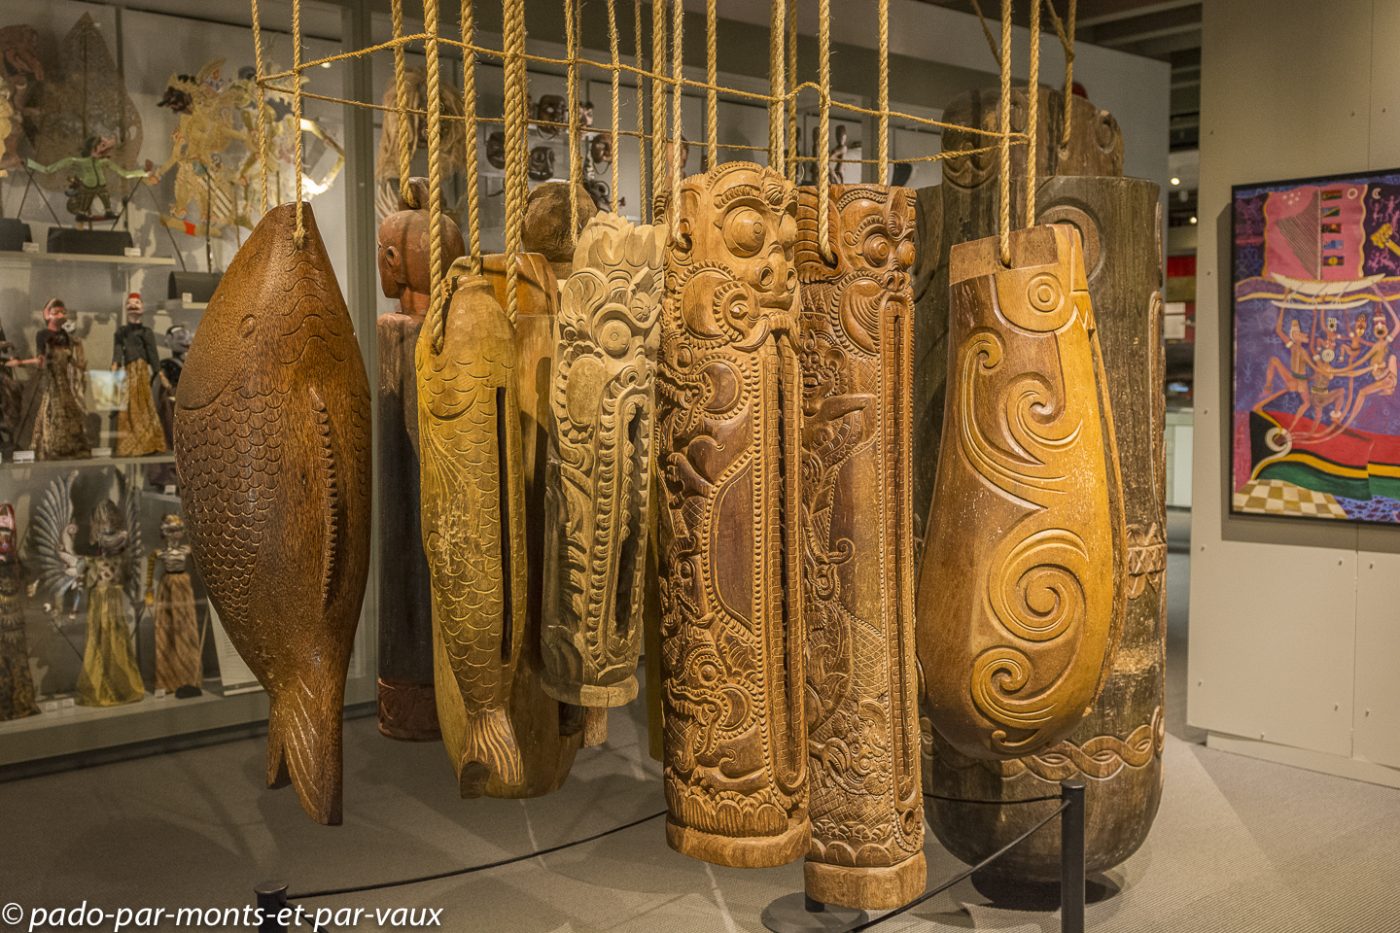  Musée d'Anthropologie  Vancouver